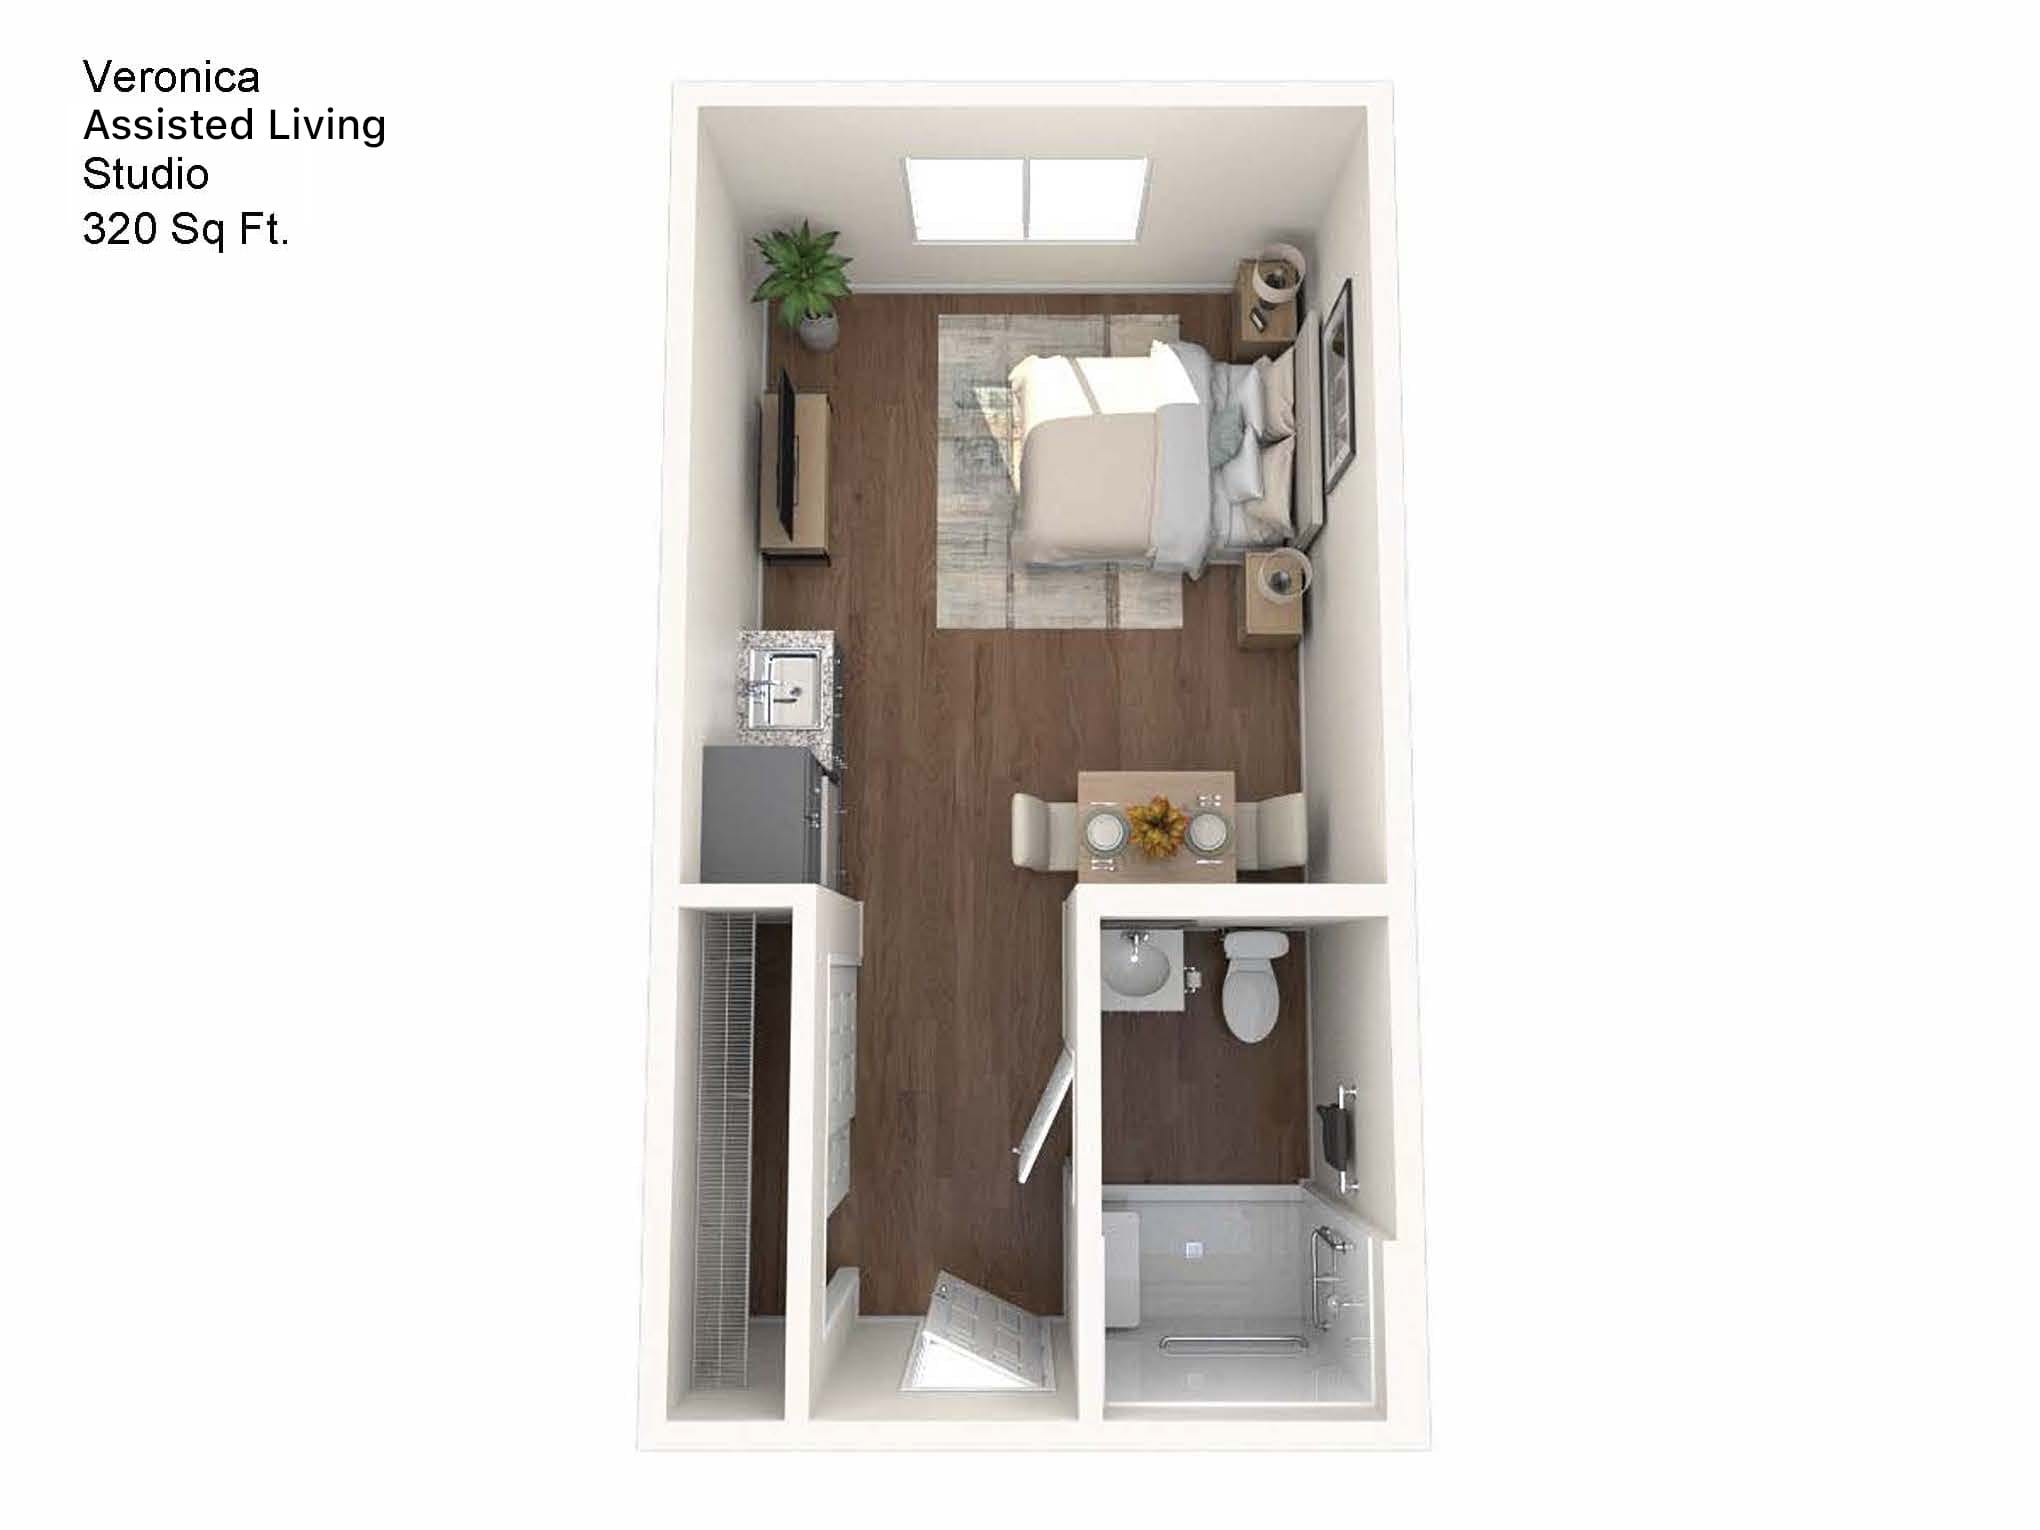 Sarah Community Veronica Assisted Living Studio Floor Plan